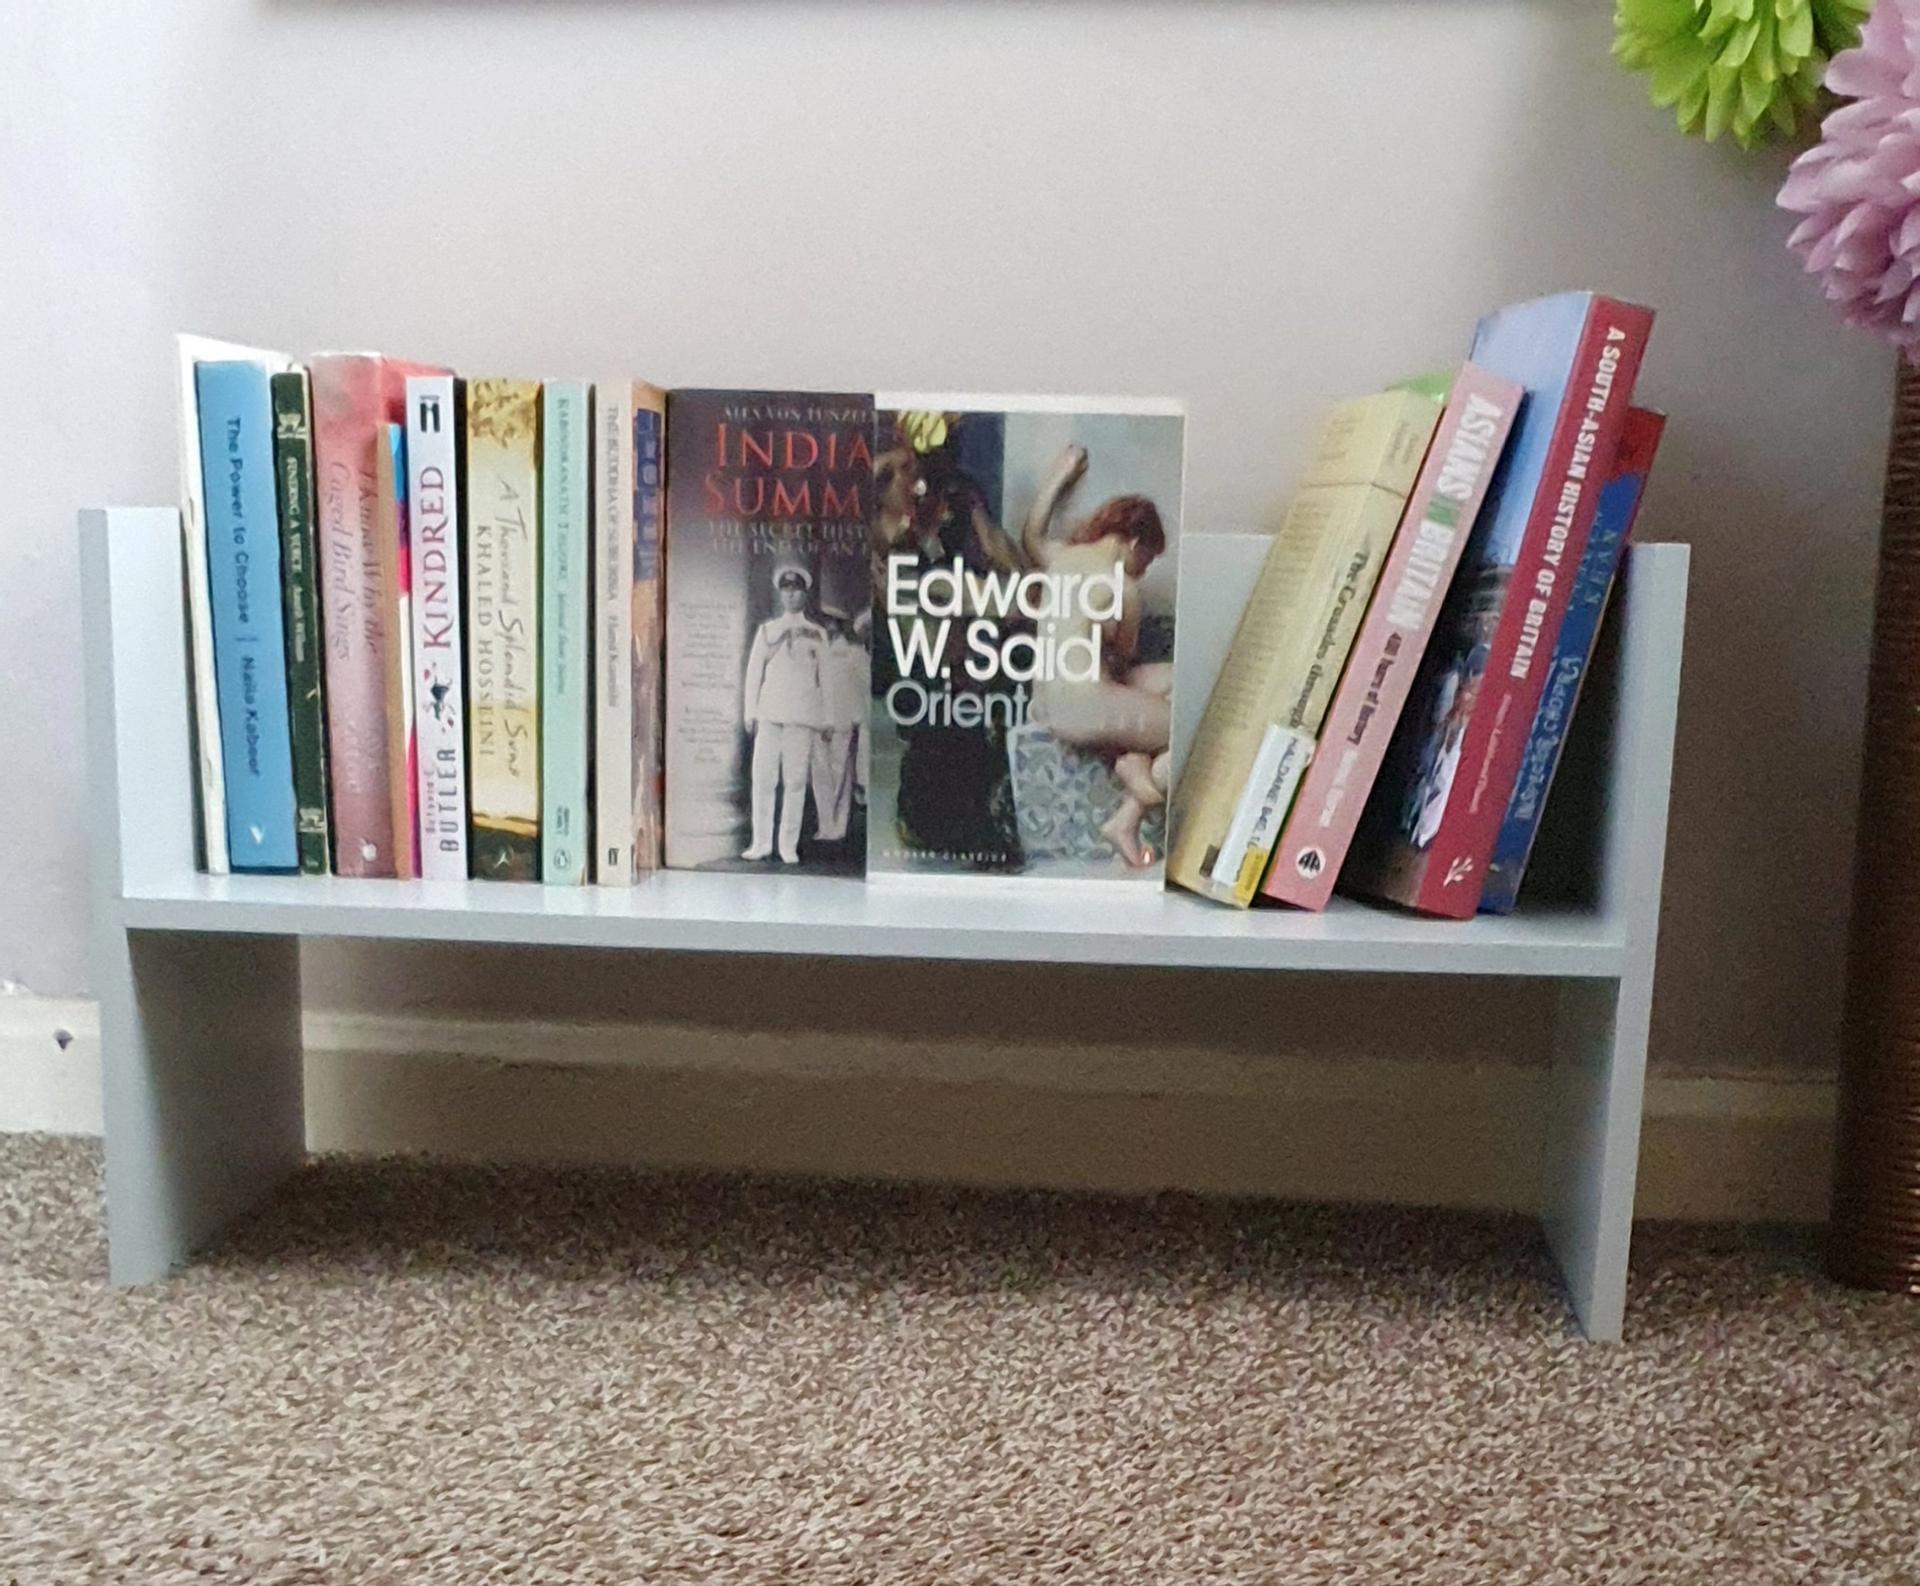 A free standing shelf of books